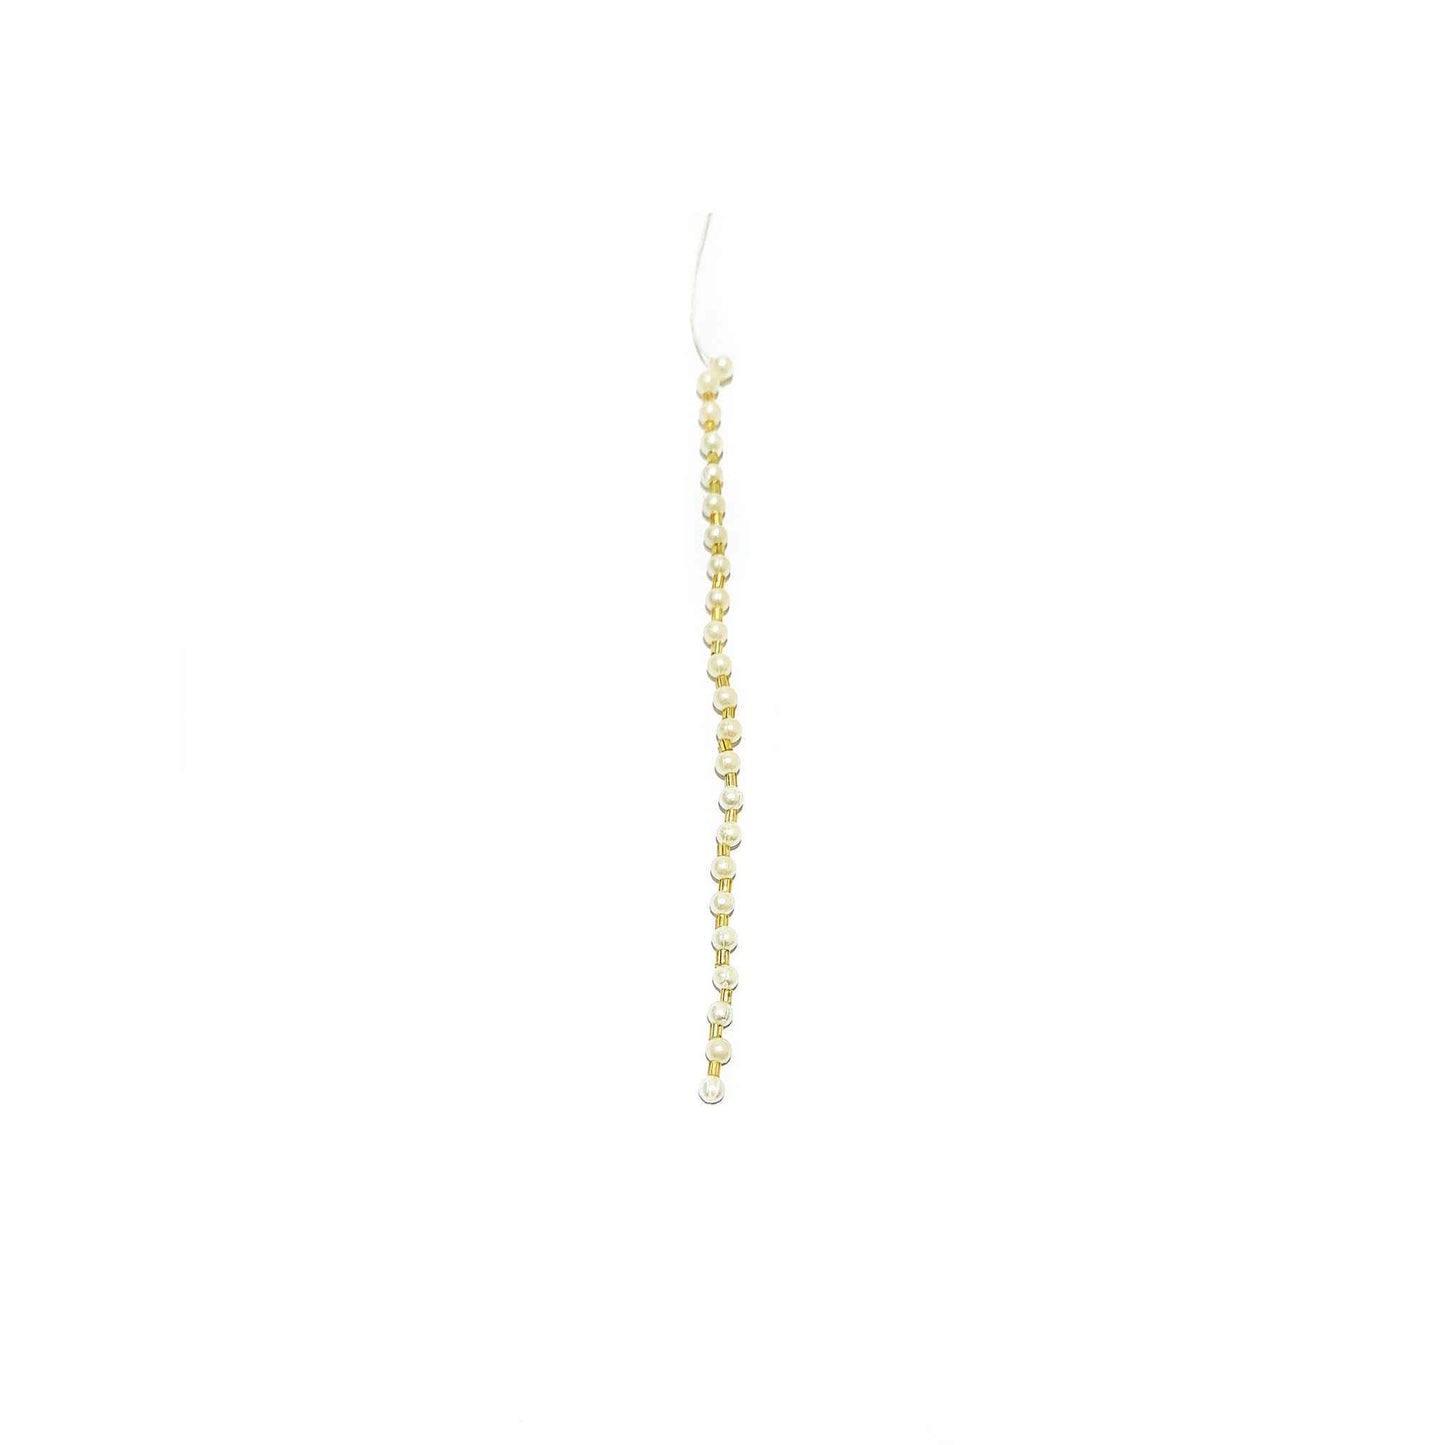 Indian Petals Handmade Single Line Beaded Thread with Tube Light Craft, Jewelry Fringe Tassel - Design 875